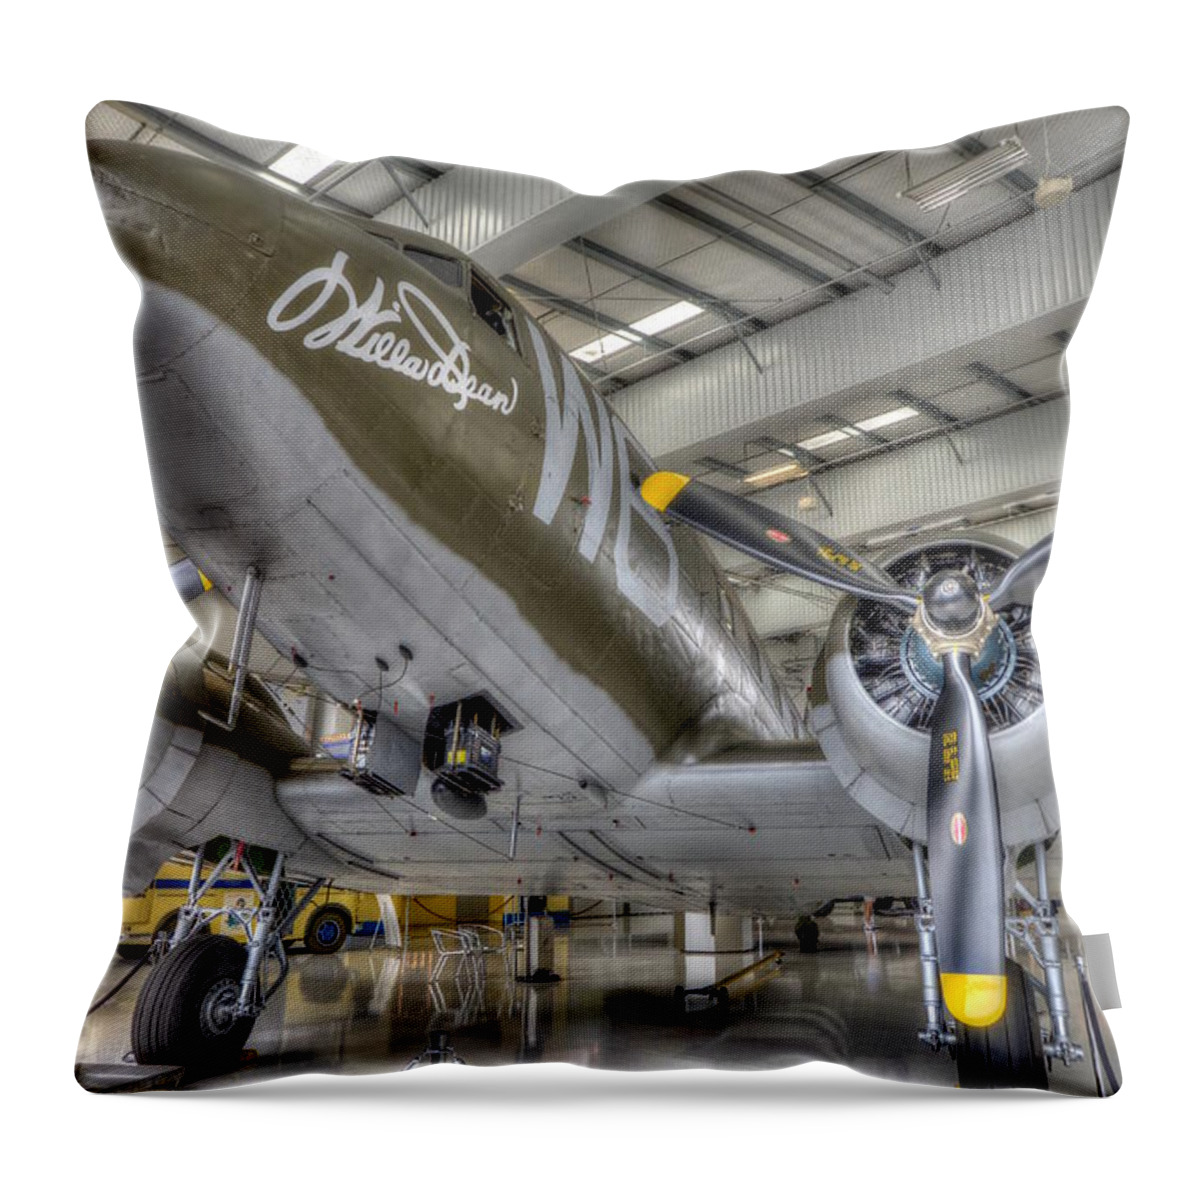 Plane Throw Pillow featuring the photograph Big Boy by Craig Incardone